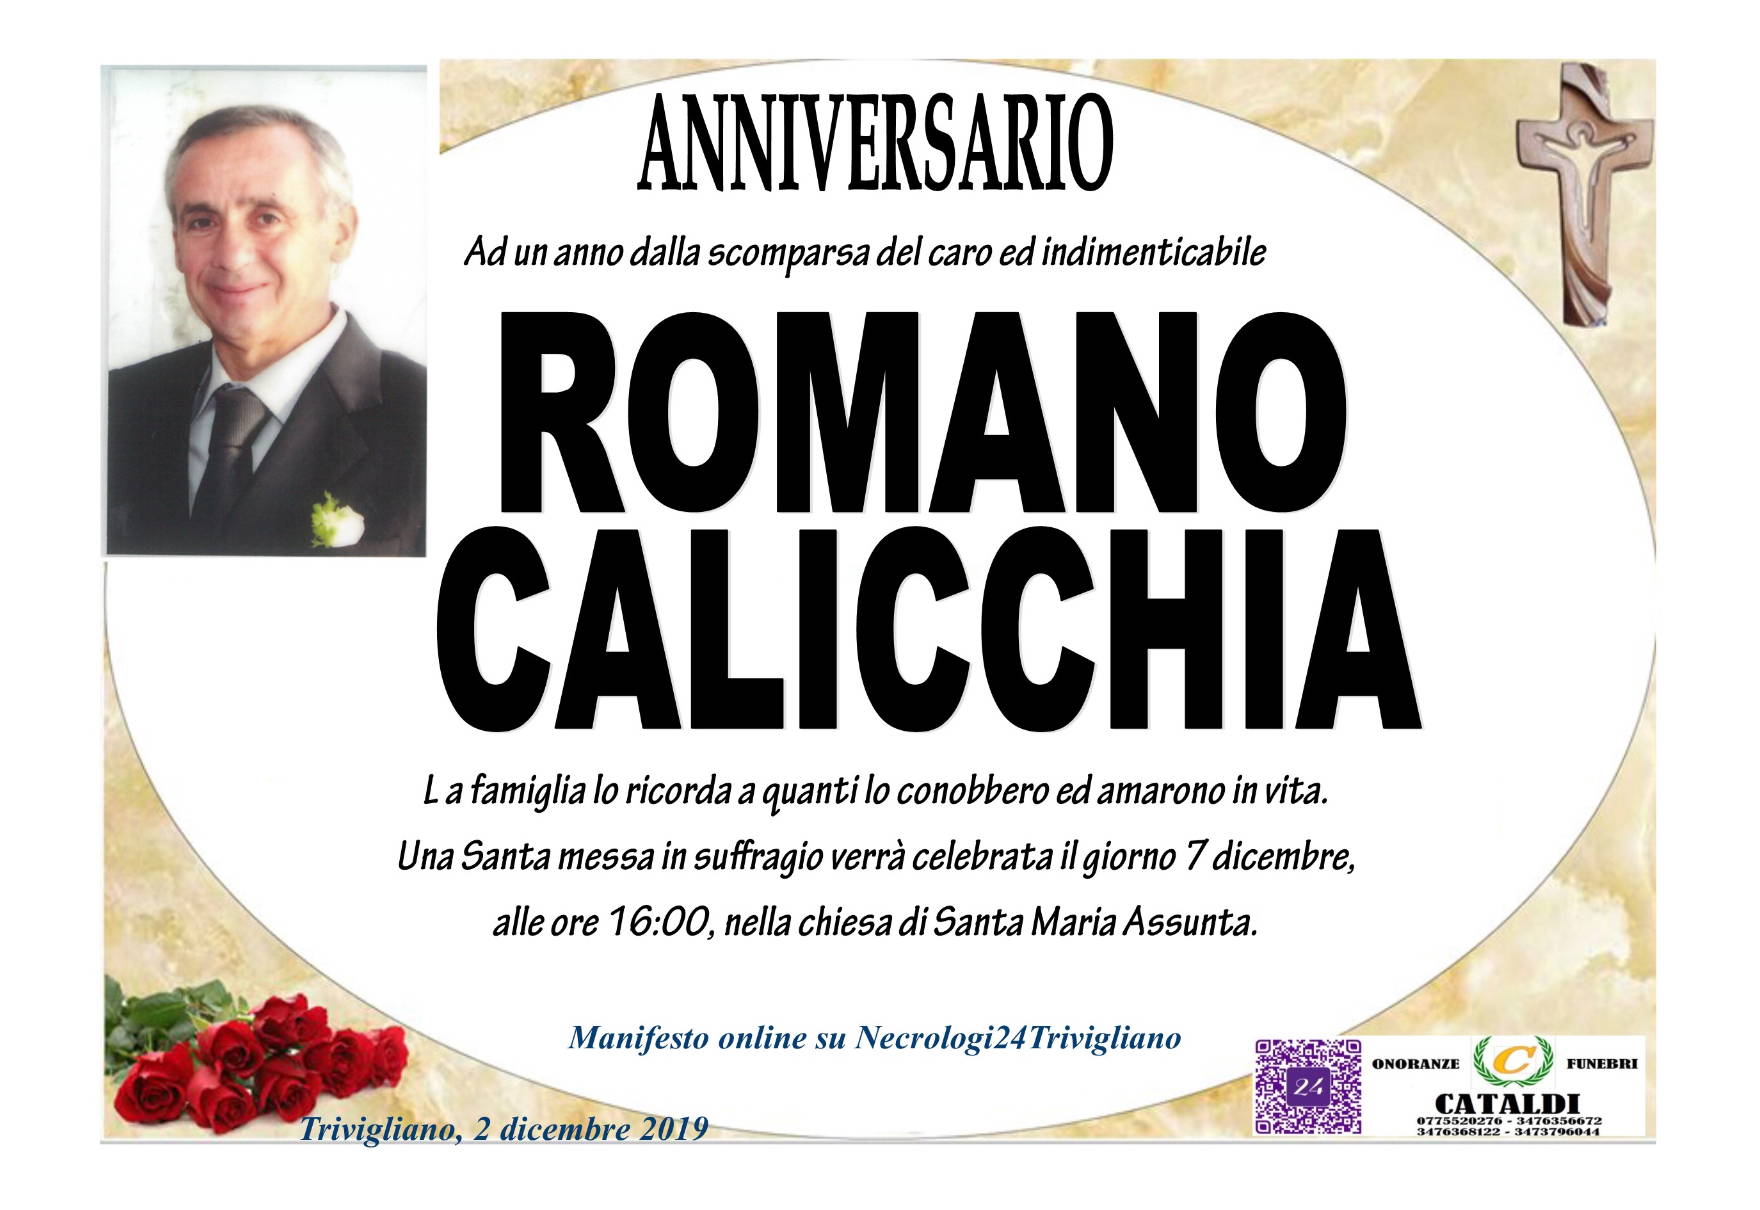 Romano Calicchia